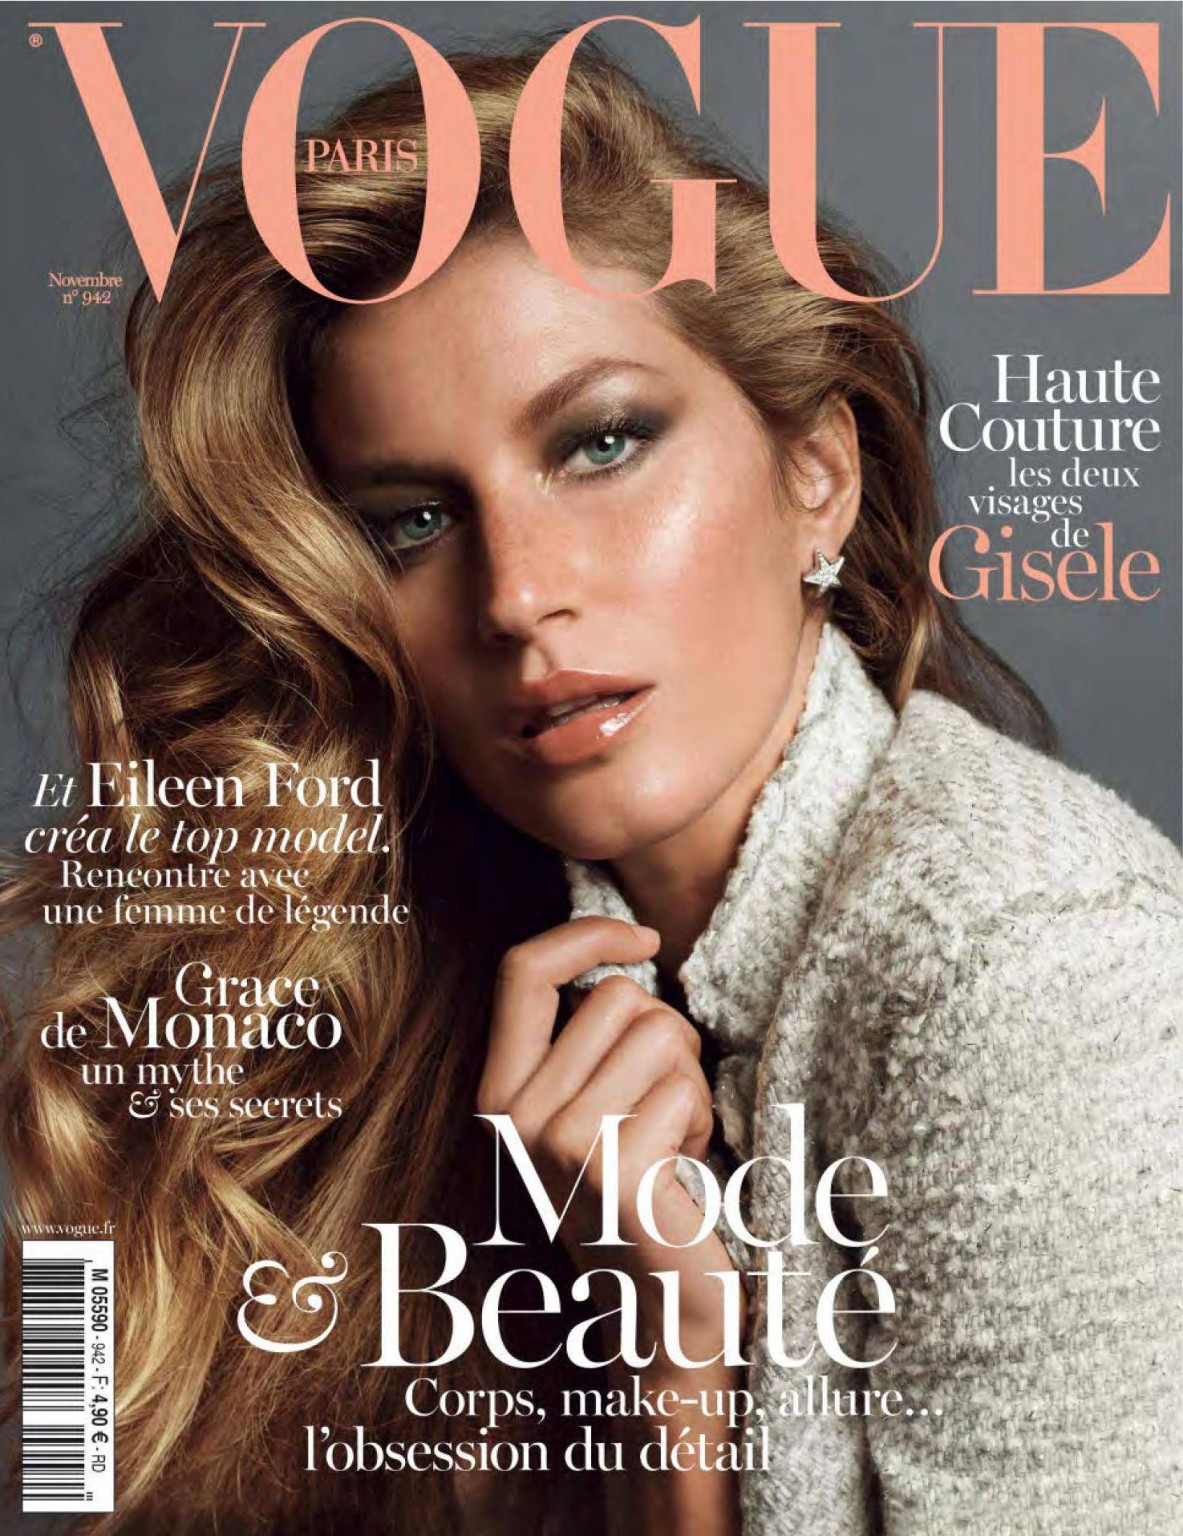 Gisele Bundchen showing off her bare ass in November issue of Vogue Magazine Par